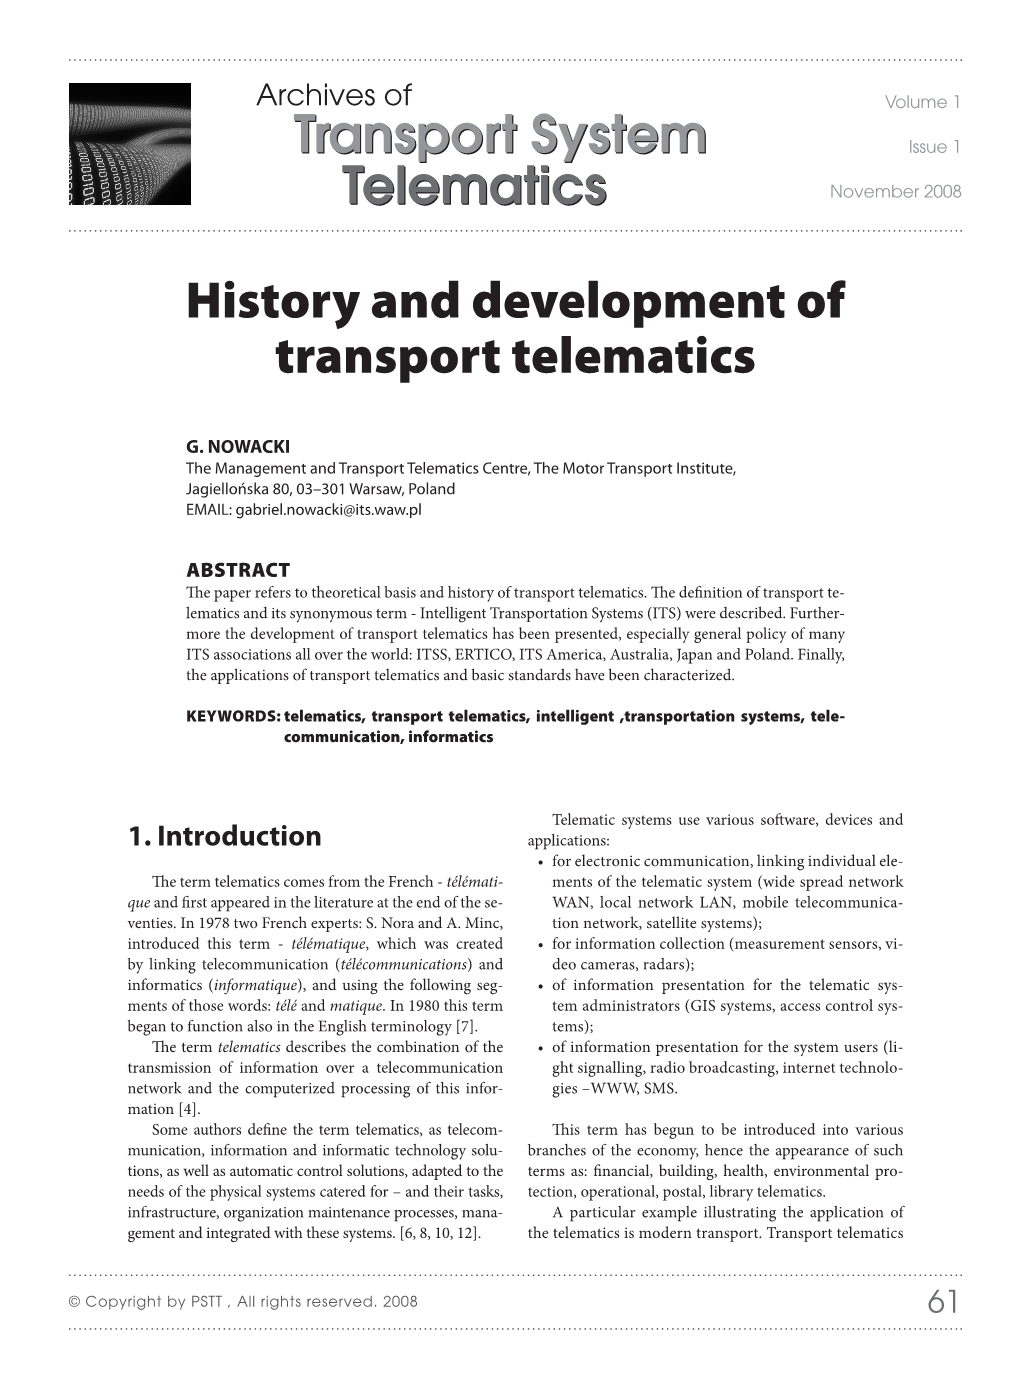 Telematics Transport System History and Development of Transport